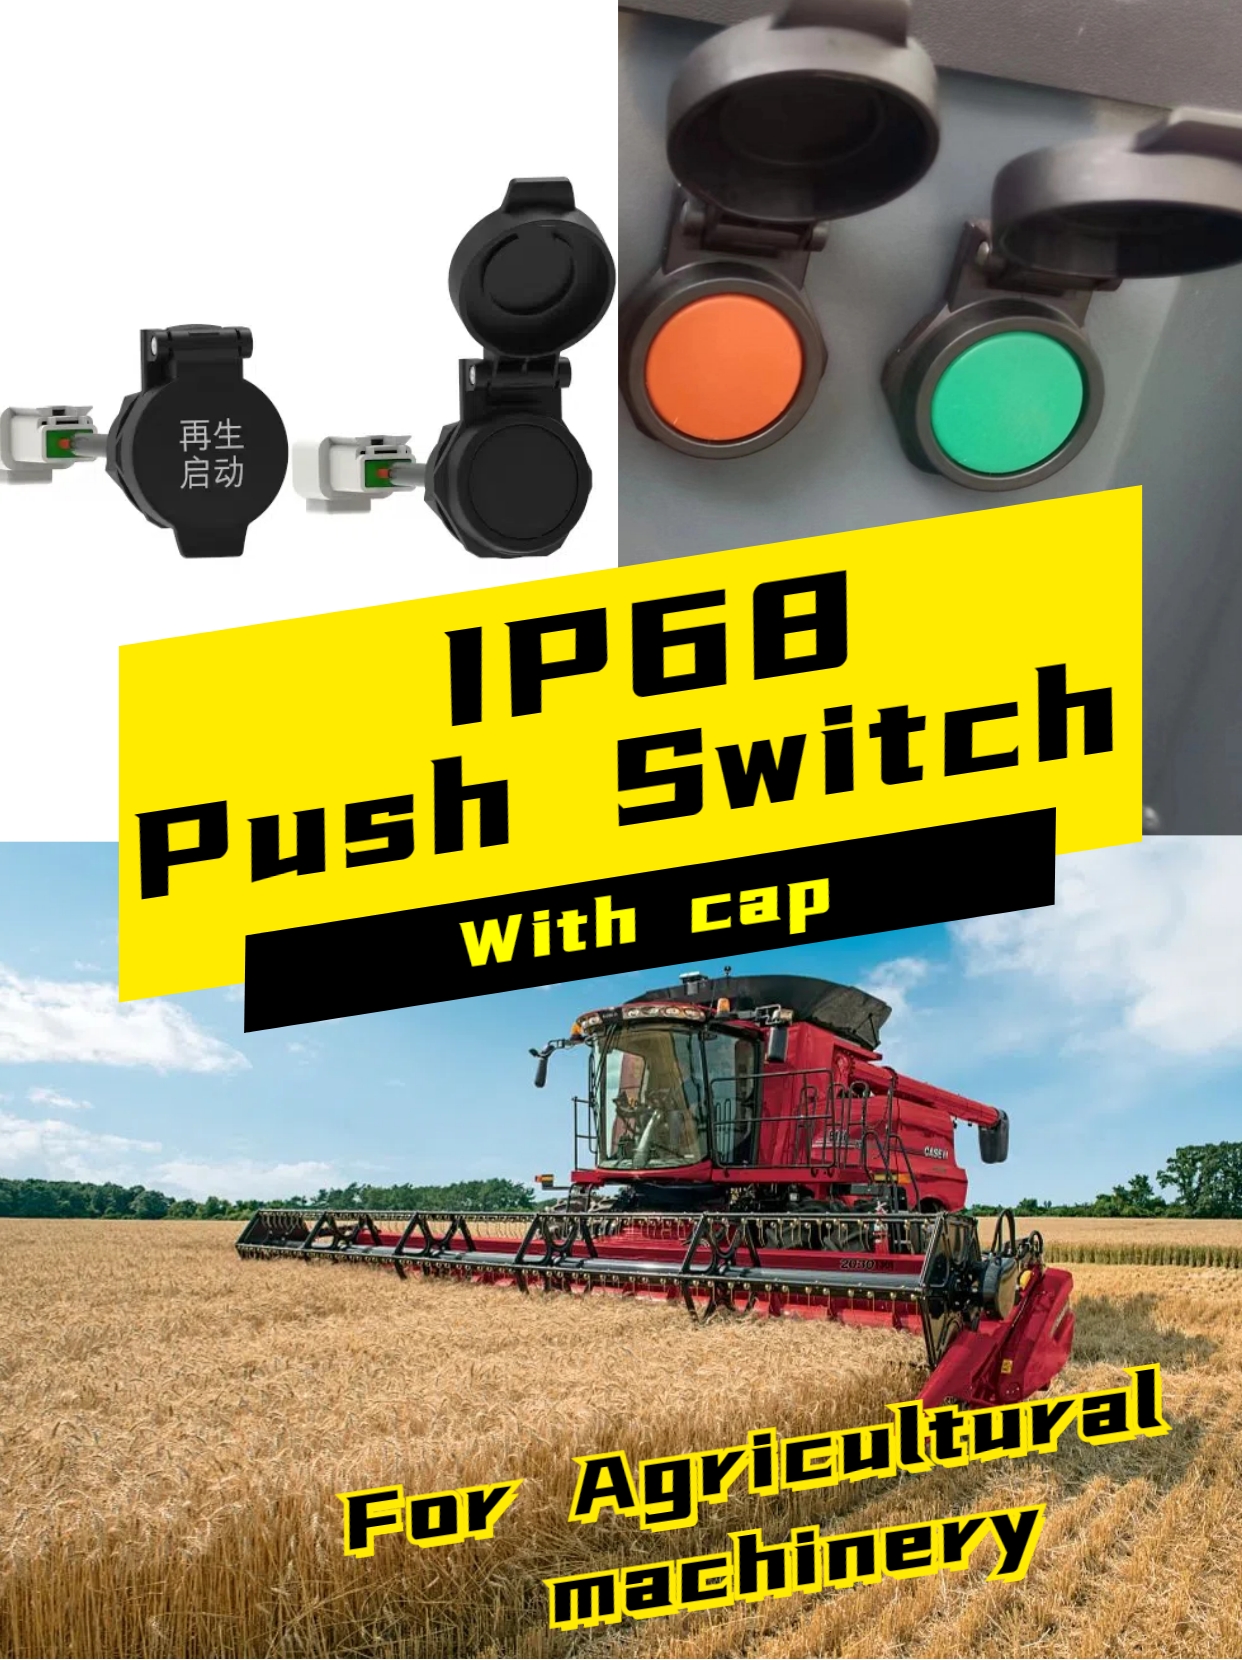 IP68 push switch.jpg